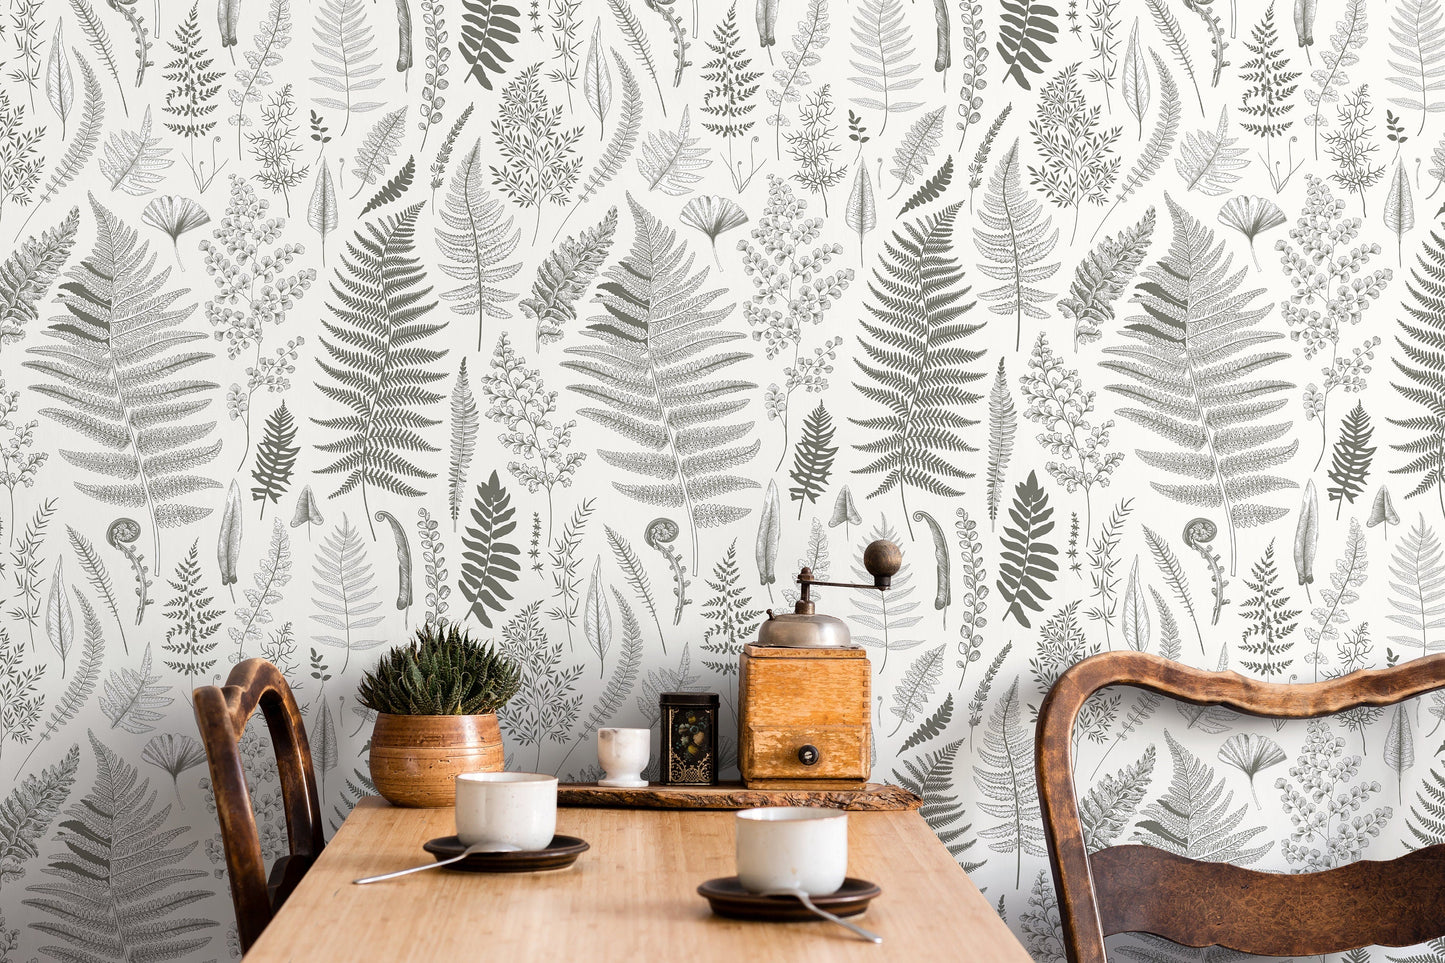 Gray Botanical Leaf Wallpaper / Peel and Stick Wallpaper Removable Wallpaper Home Decor Wall Art Wall Decor Room Decor - D066